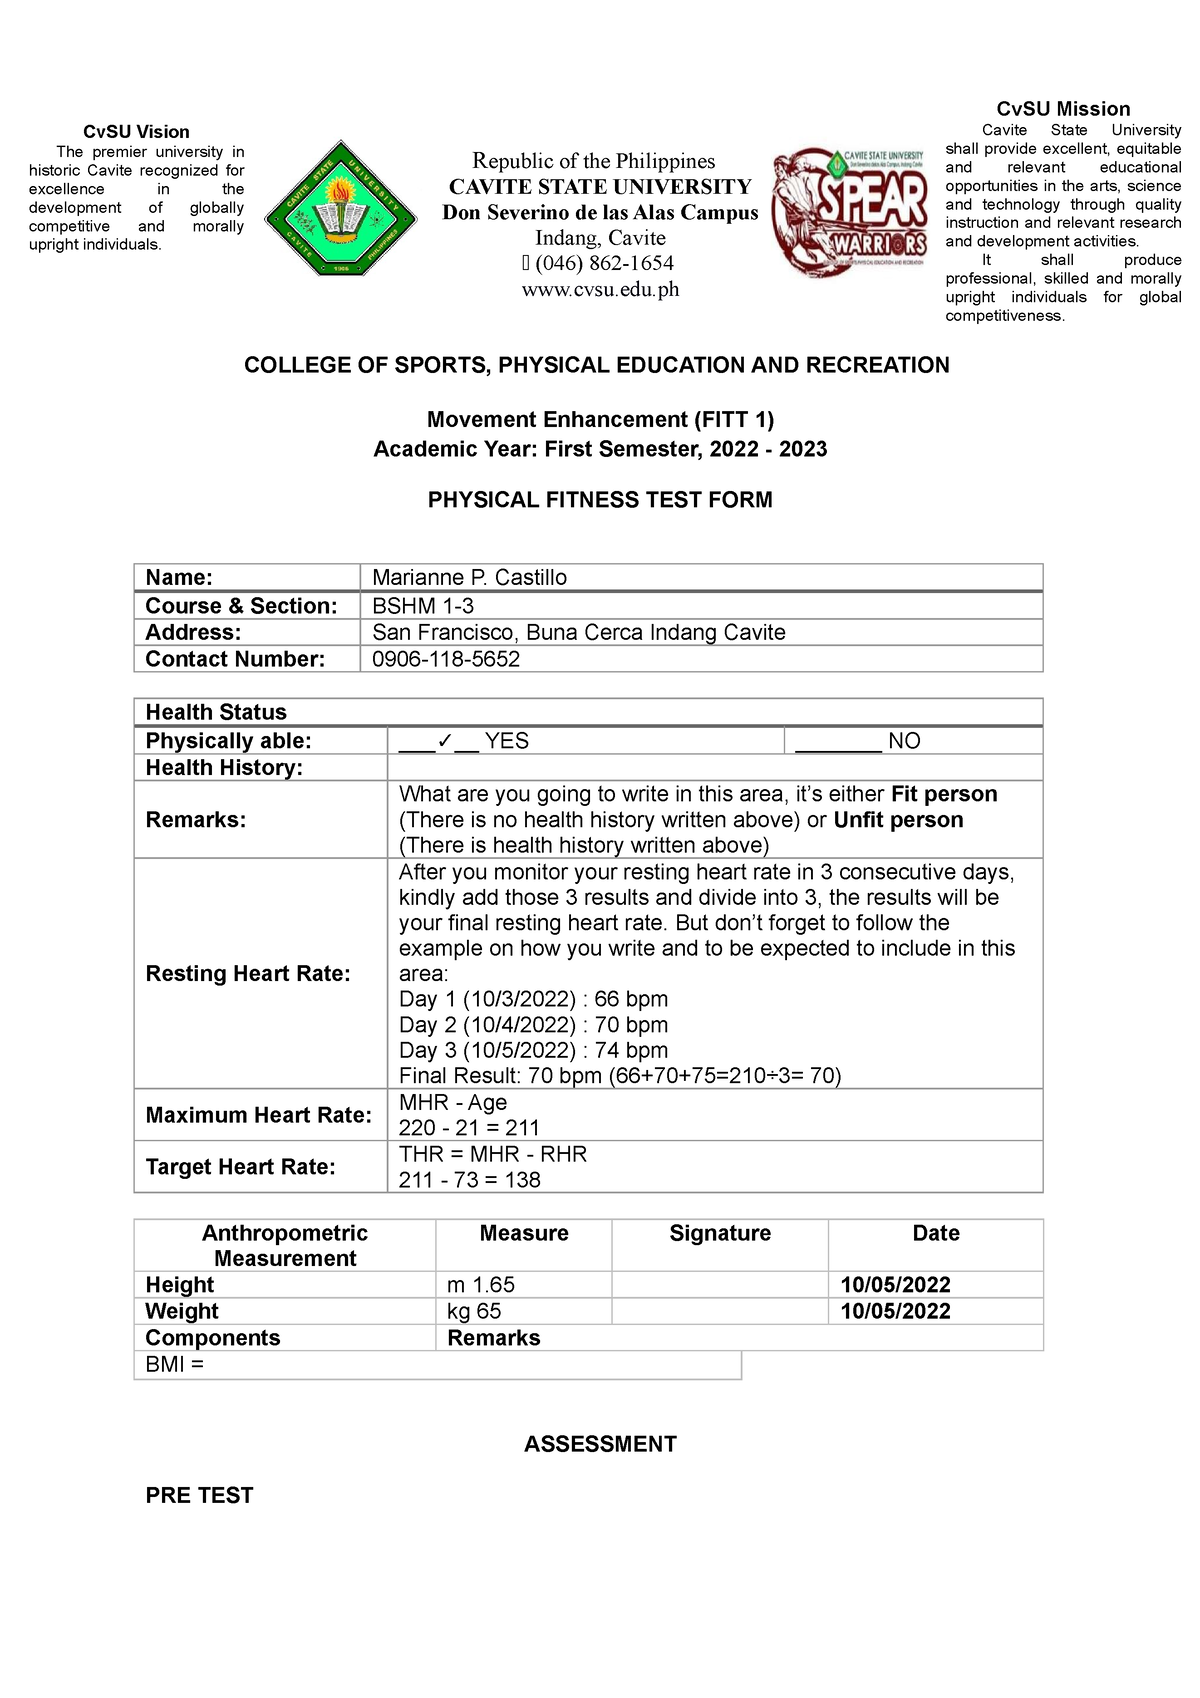 Fitt 1 Pft Form 2022 2023 Republic Of The Philippines Cavite State University Don Severino De 0633